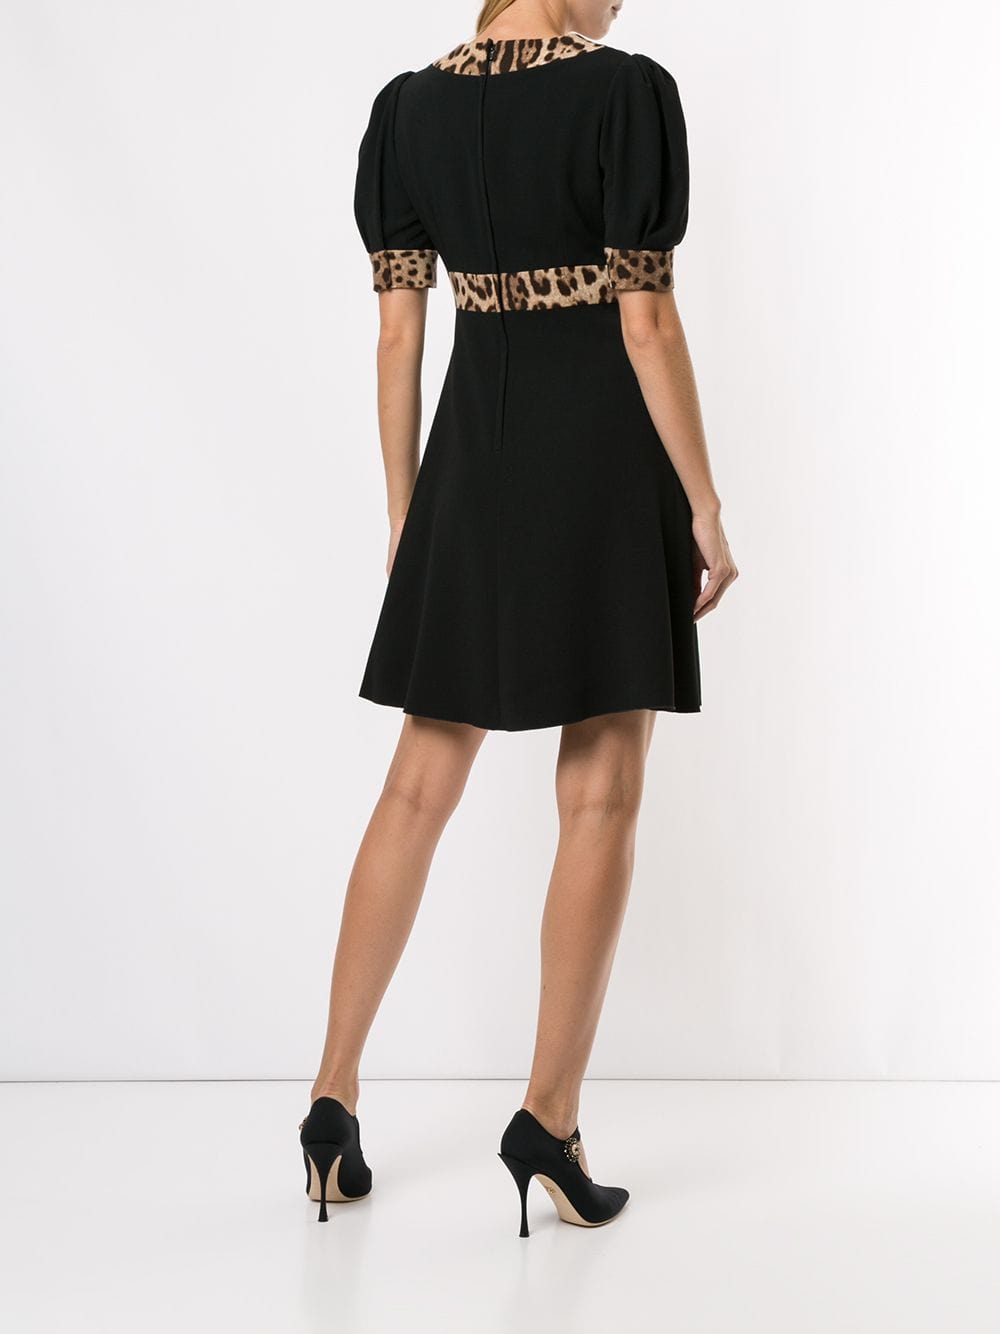 Dolce & Gabbana Leopard Print Trimmed Flared Dress